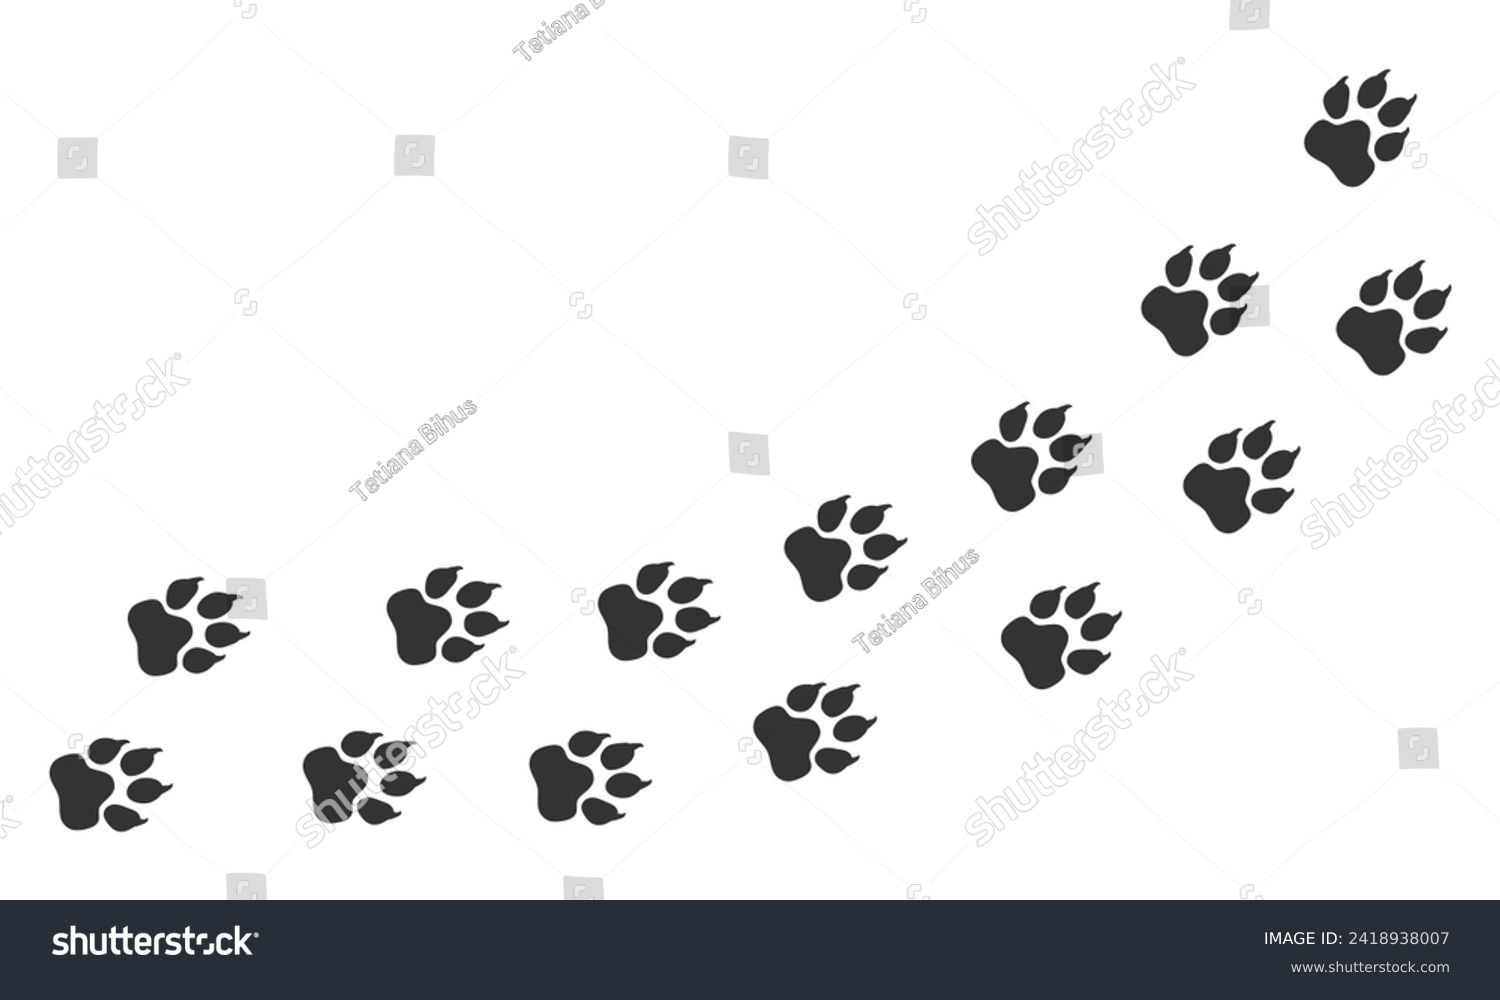 SVG of Paws of a leopard. Animal paw prints, diagonal animal tracks for prints. Vector illustration. svg